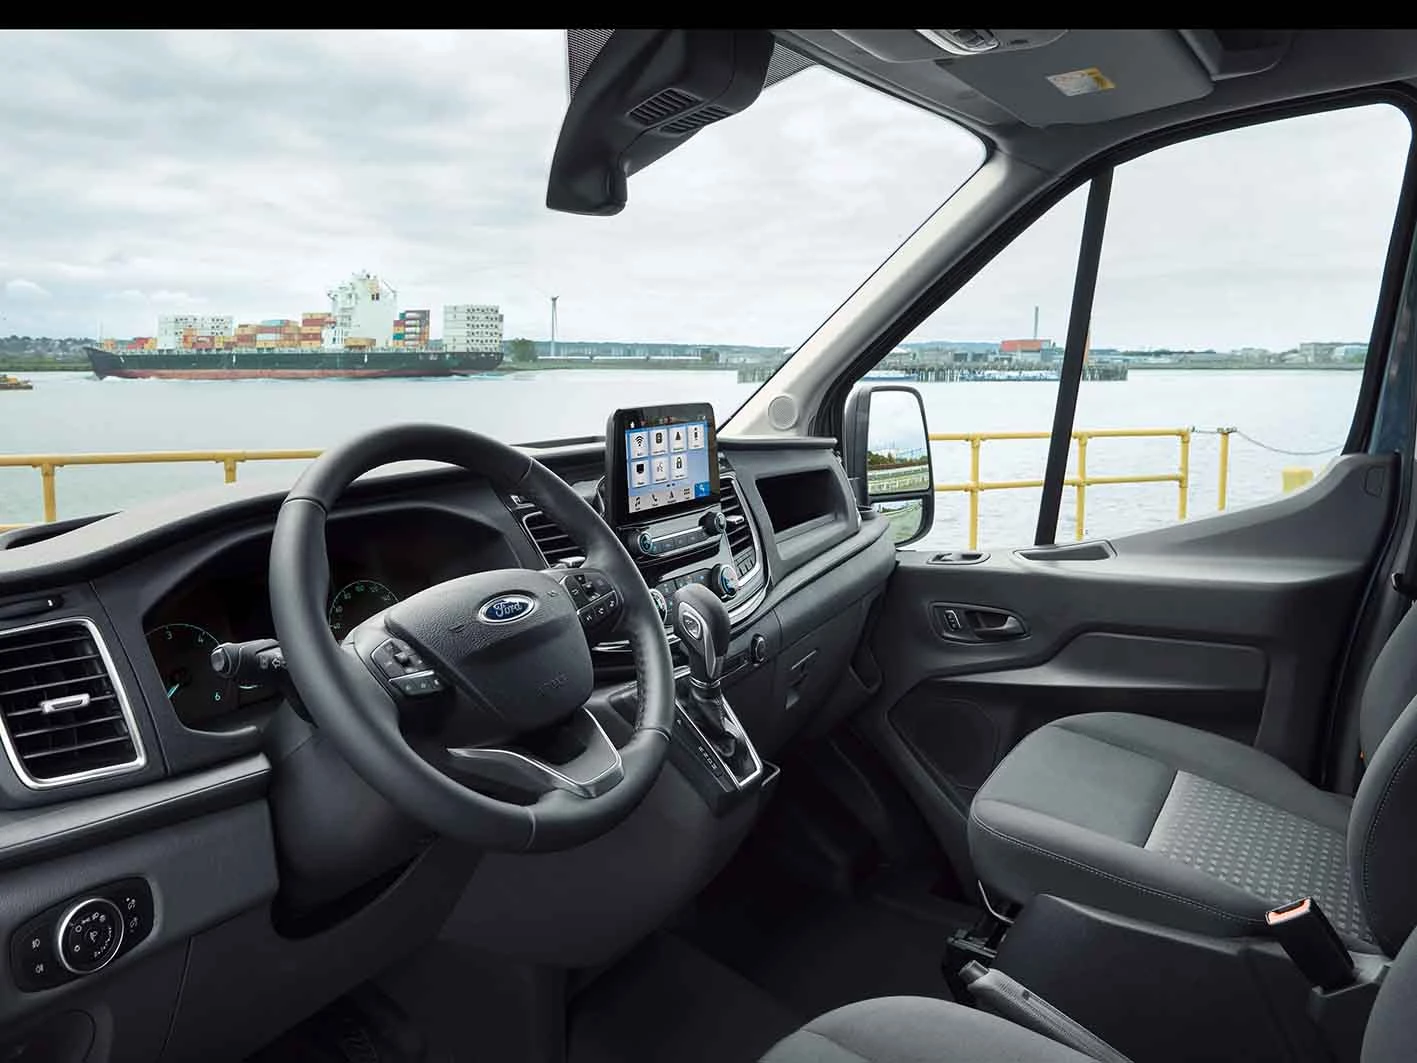 Ford Transit Ladvogn 2019 Interioer Indretning Rat Foerersaede